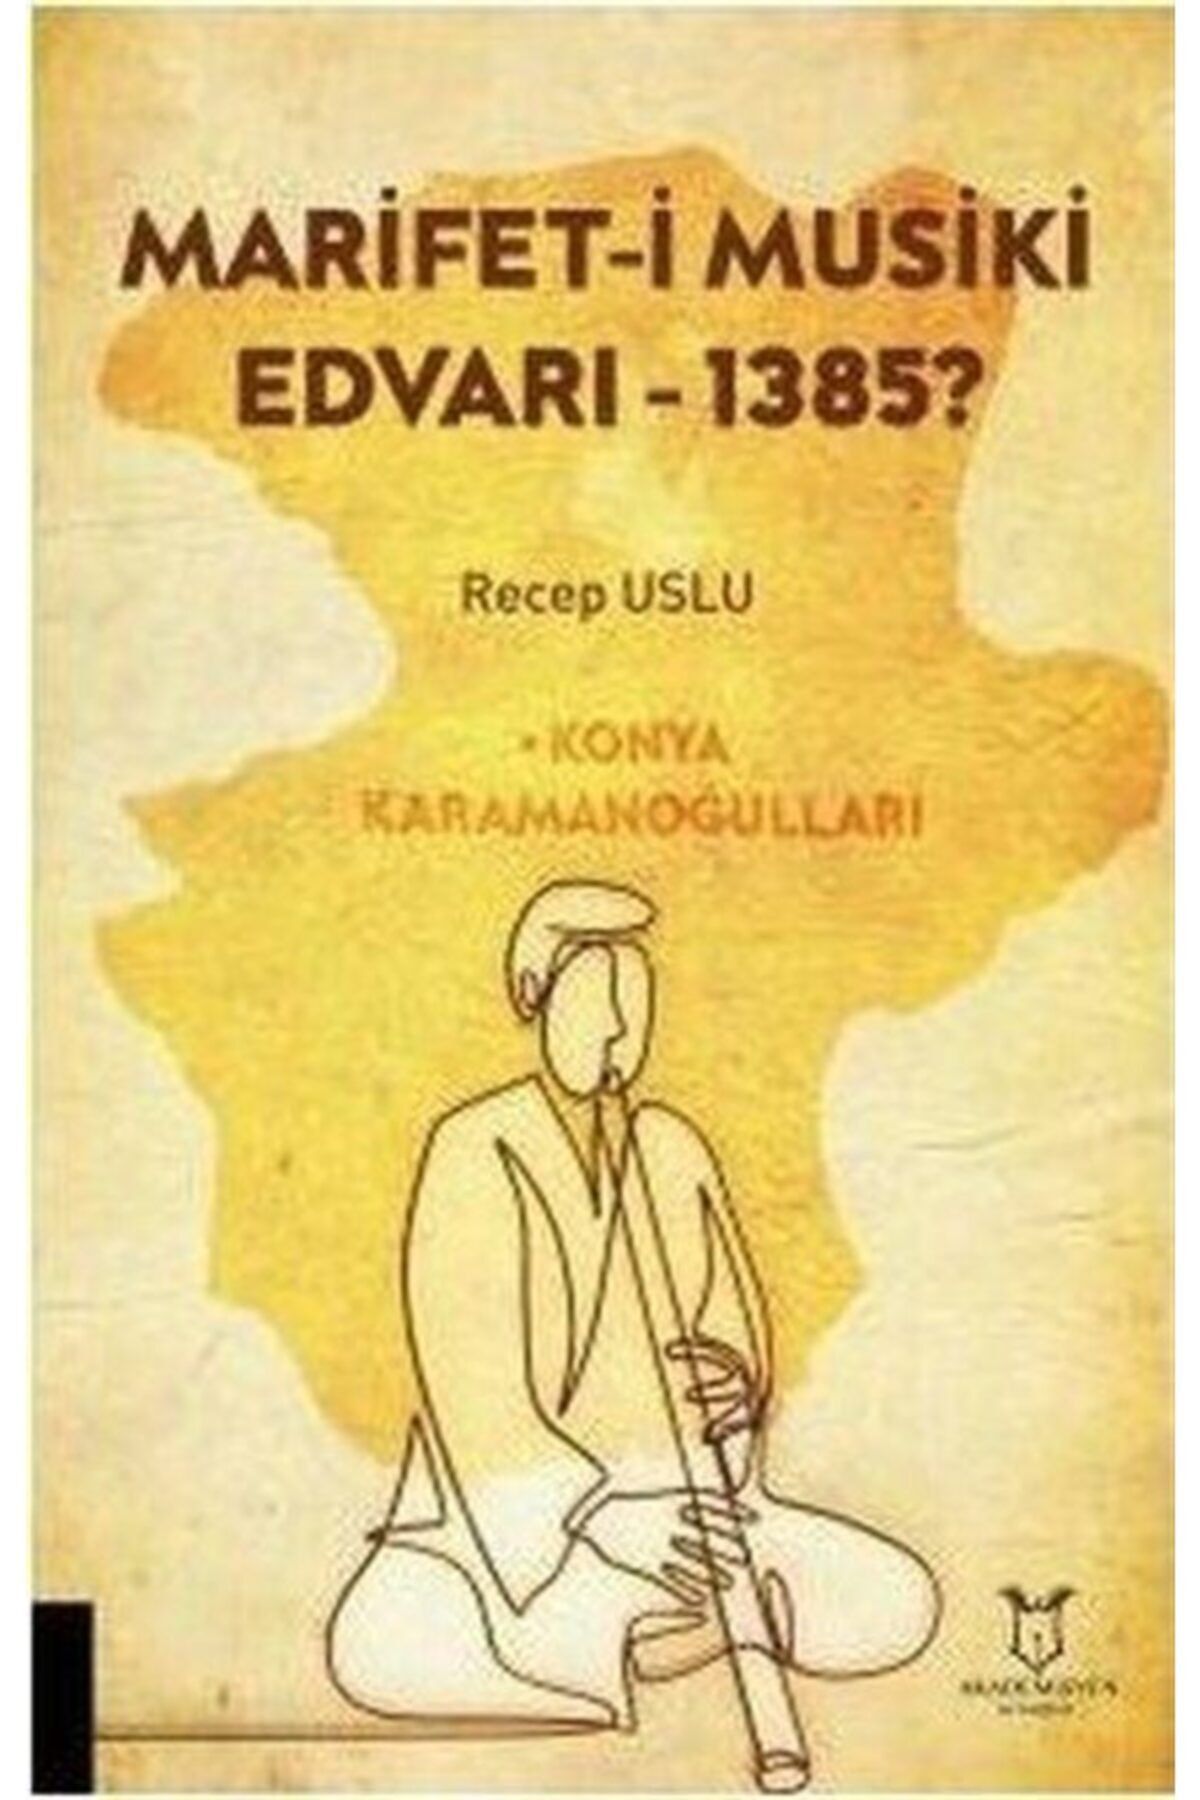 Romans Marifet-ı Musiki Edvarı - 1385?